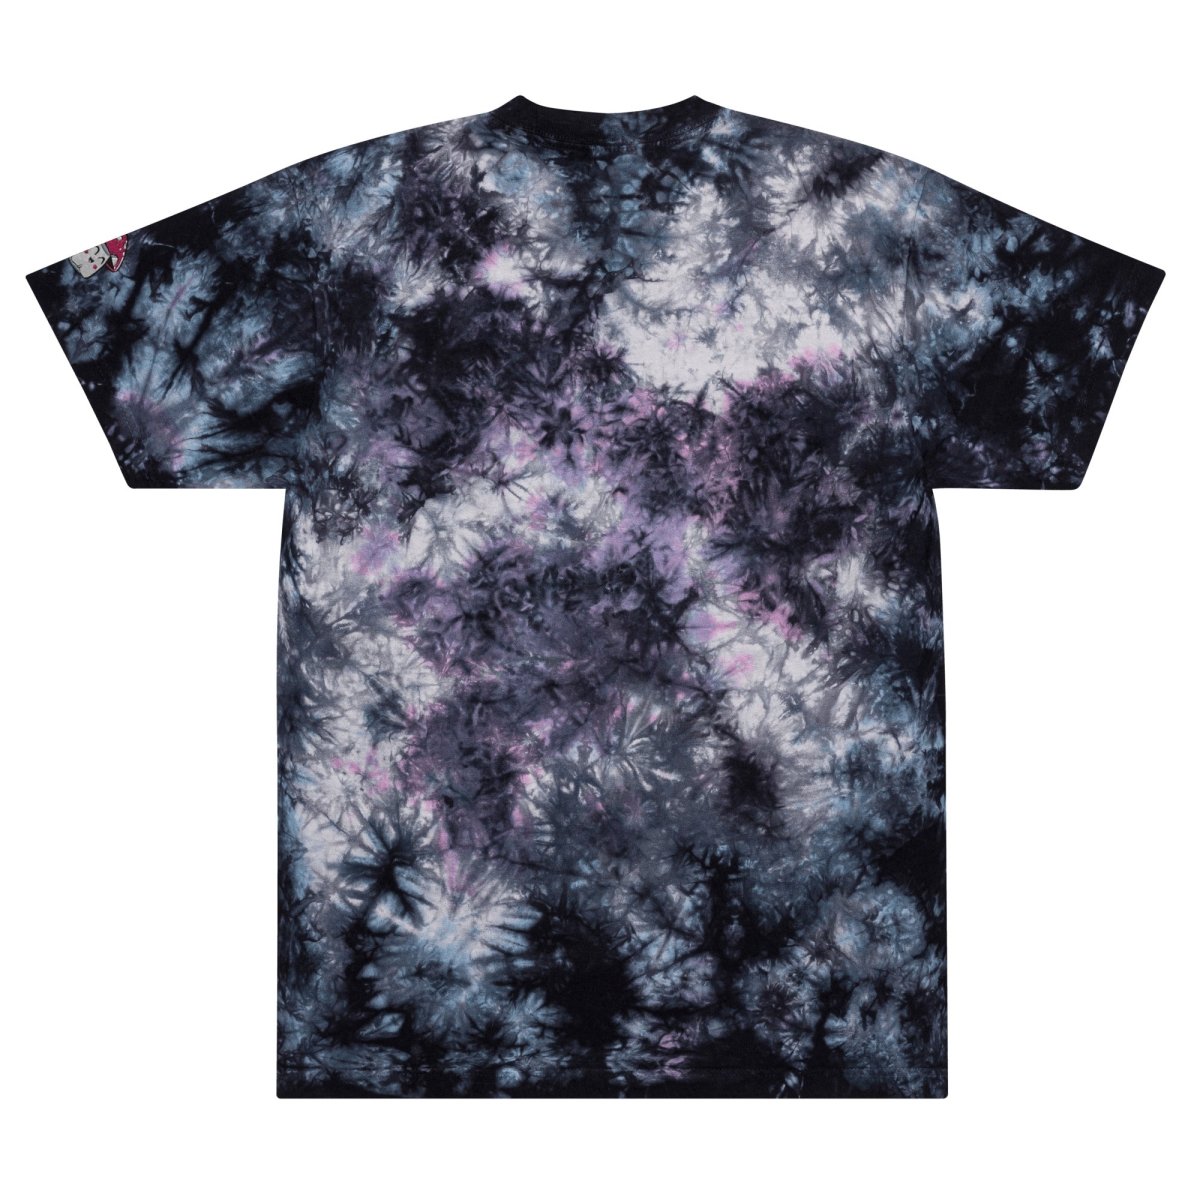 Mushy-oom // Embroidery tie-dye t-shirt - Maux Zachintosh